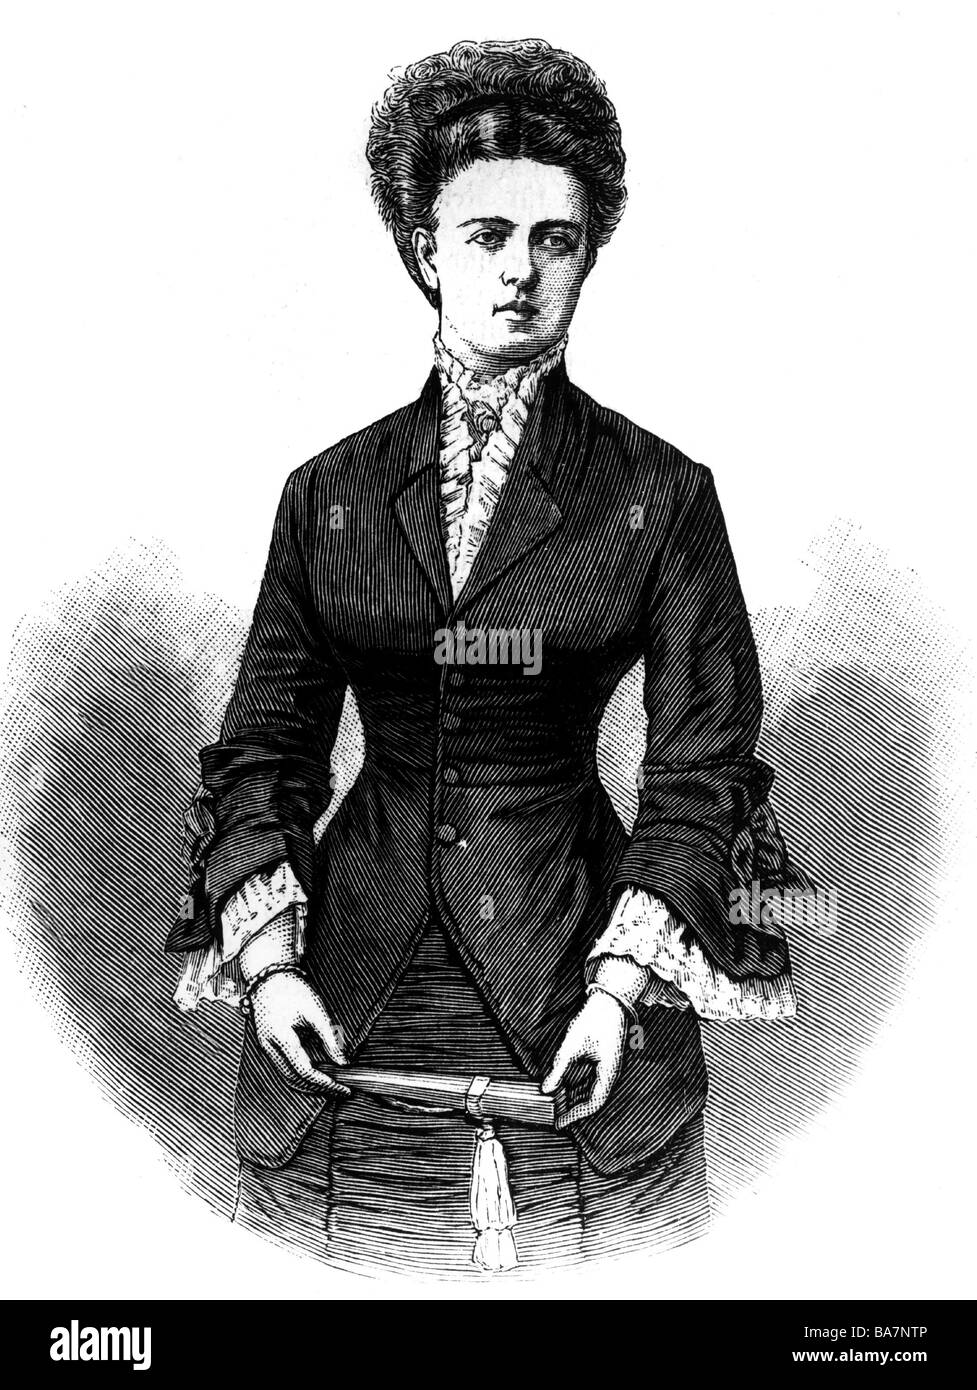 Maria Alexandrovna, 5.10.1853 - 24.10.1920, Grand Duchess of Russia, half length, wood engraving, 19th century, Stock Photo